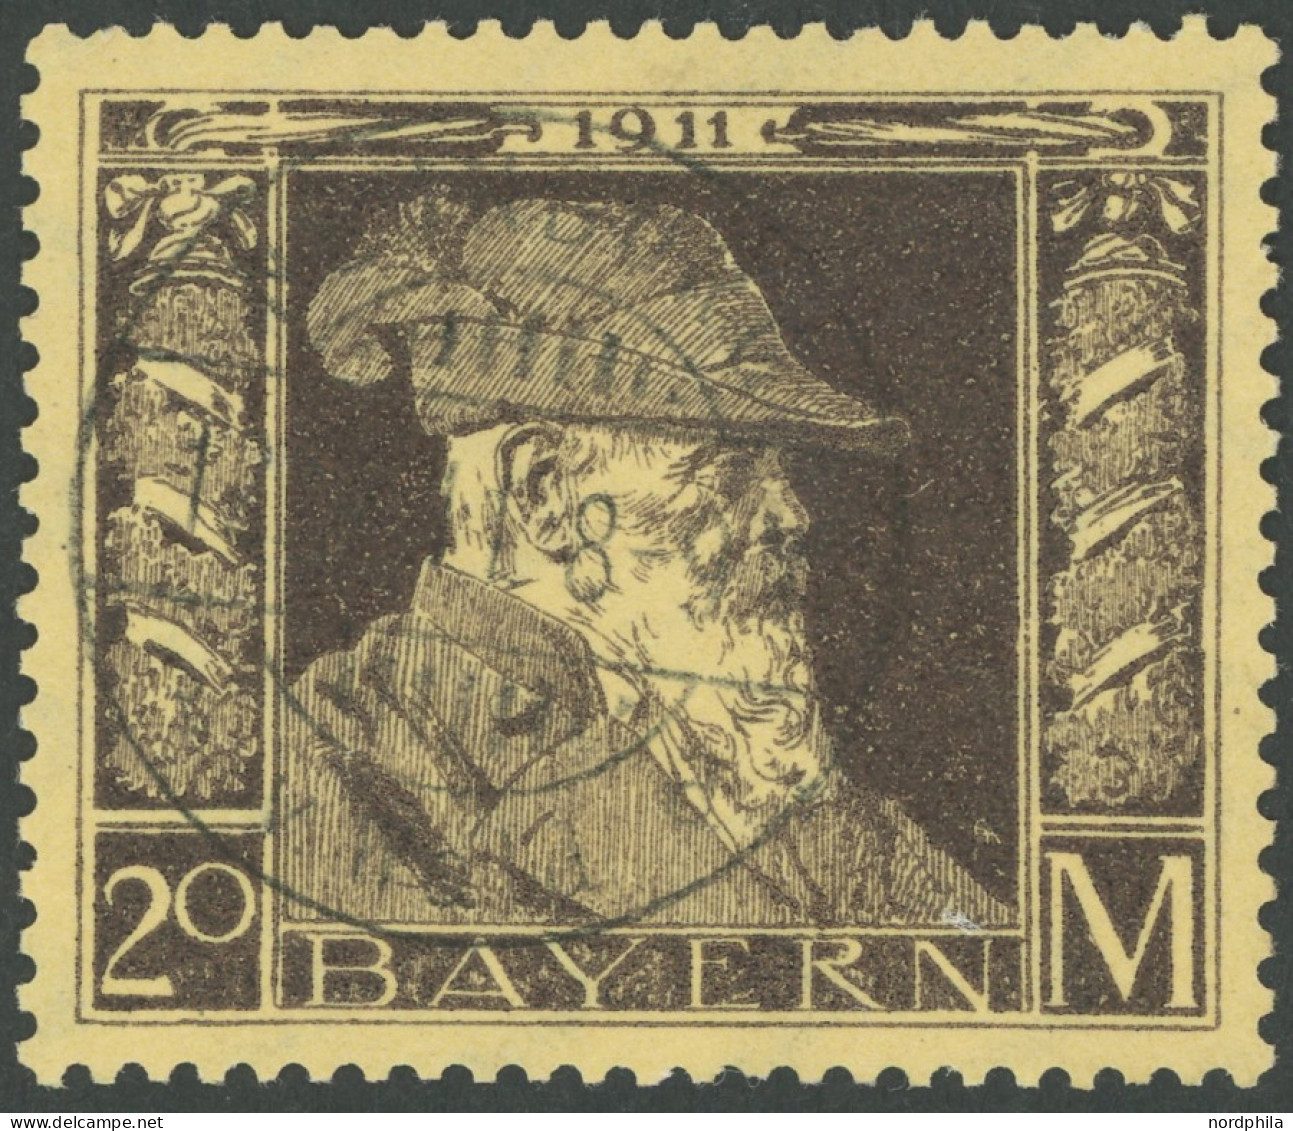 BAYERN 91II O, 1911, 20 M. Luitpold, Type II, Pracht, Mi. 450.- - Oblitérés